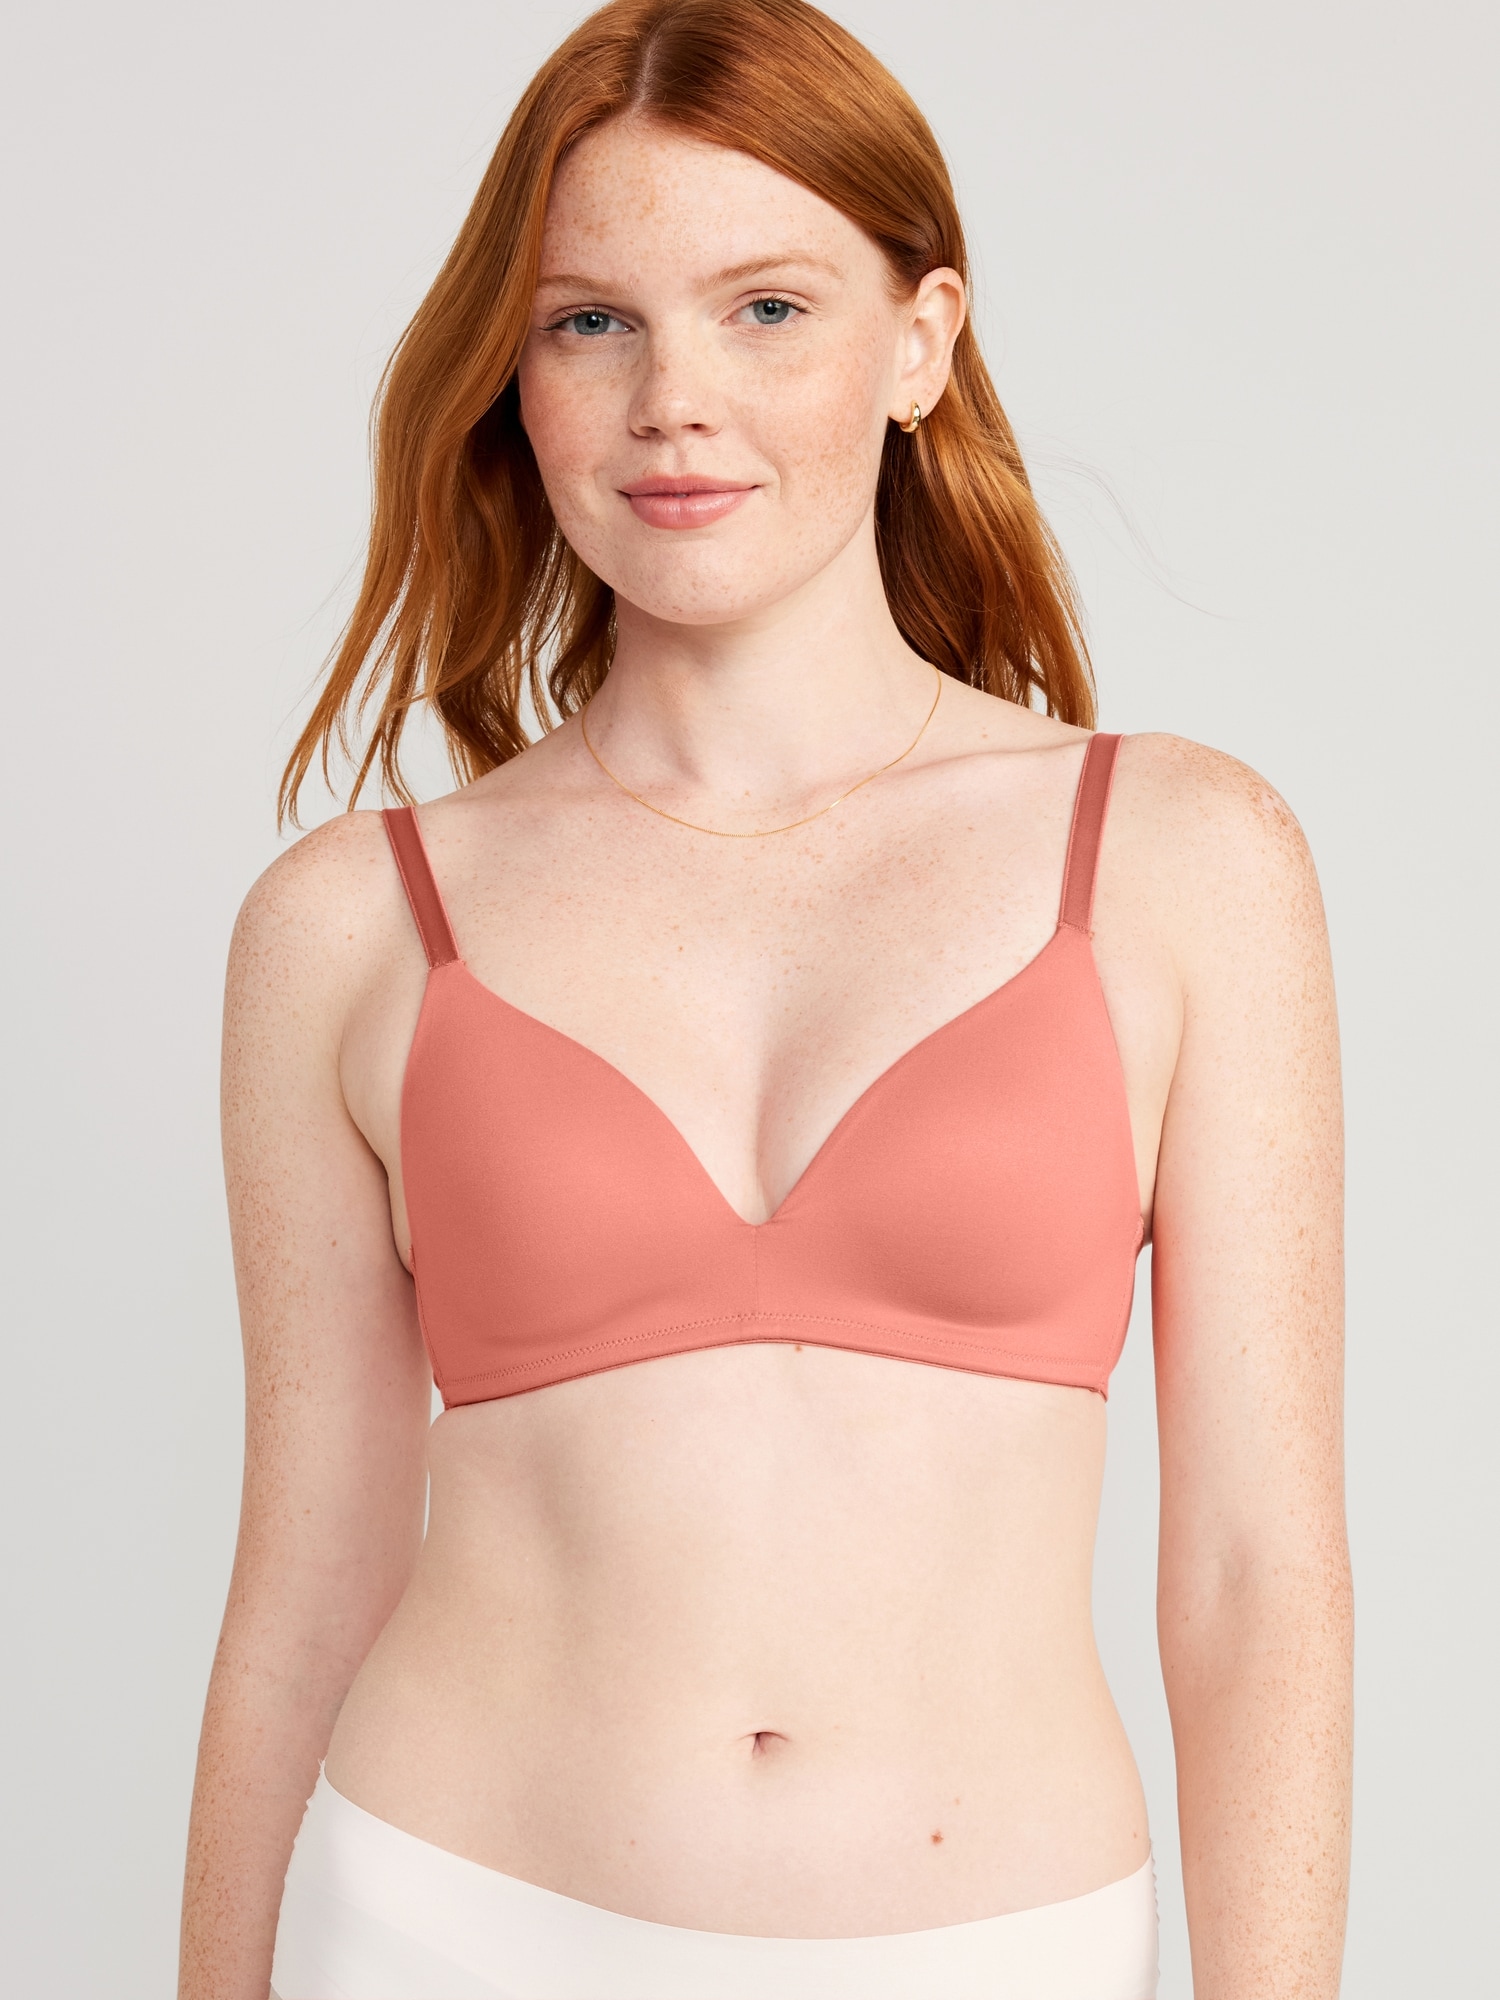 Wholesale bra size 44dd For Supportive Underwear 